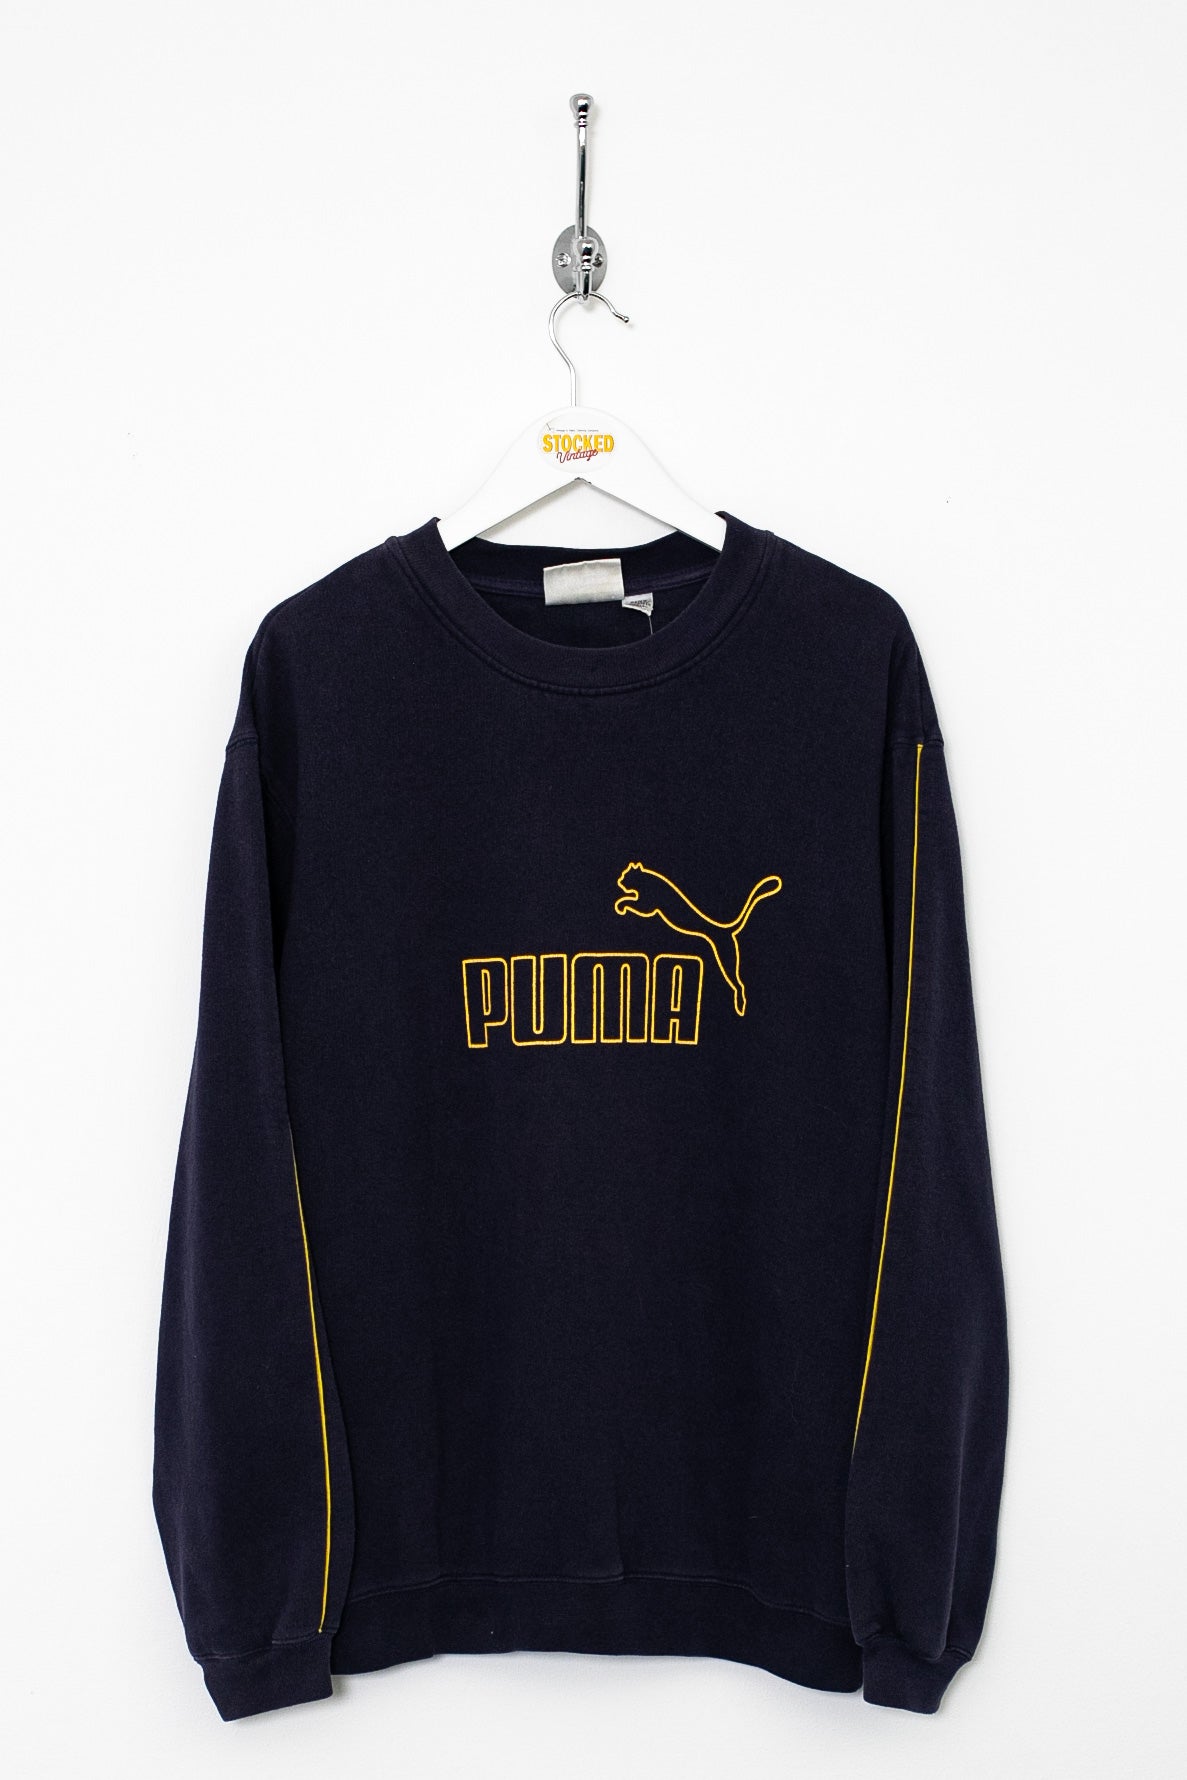 00s Puma Sweatshirt (M)